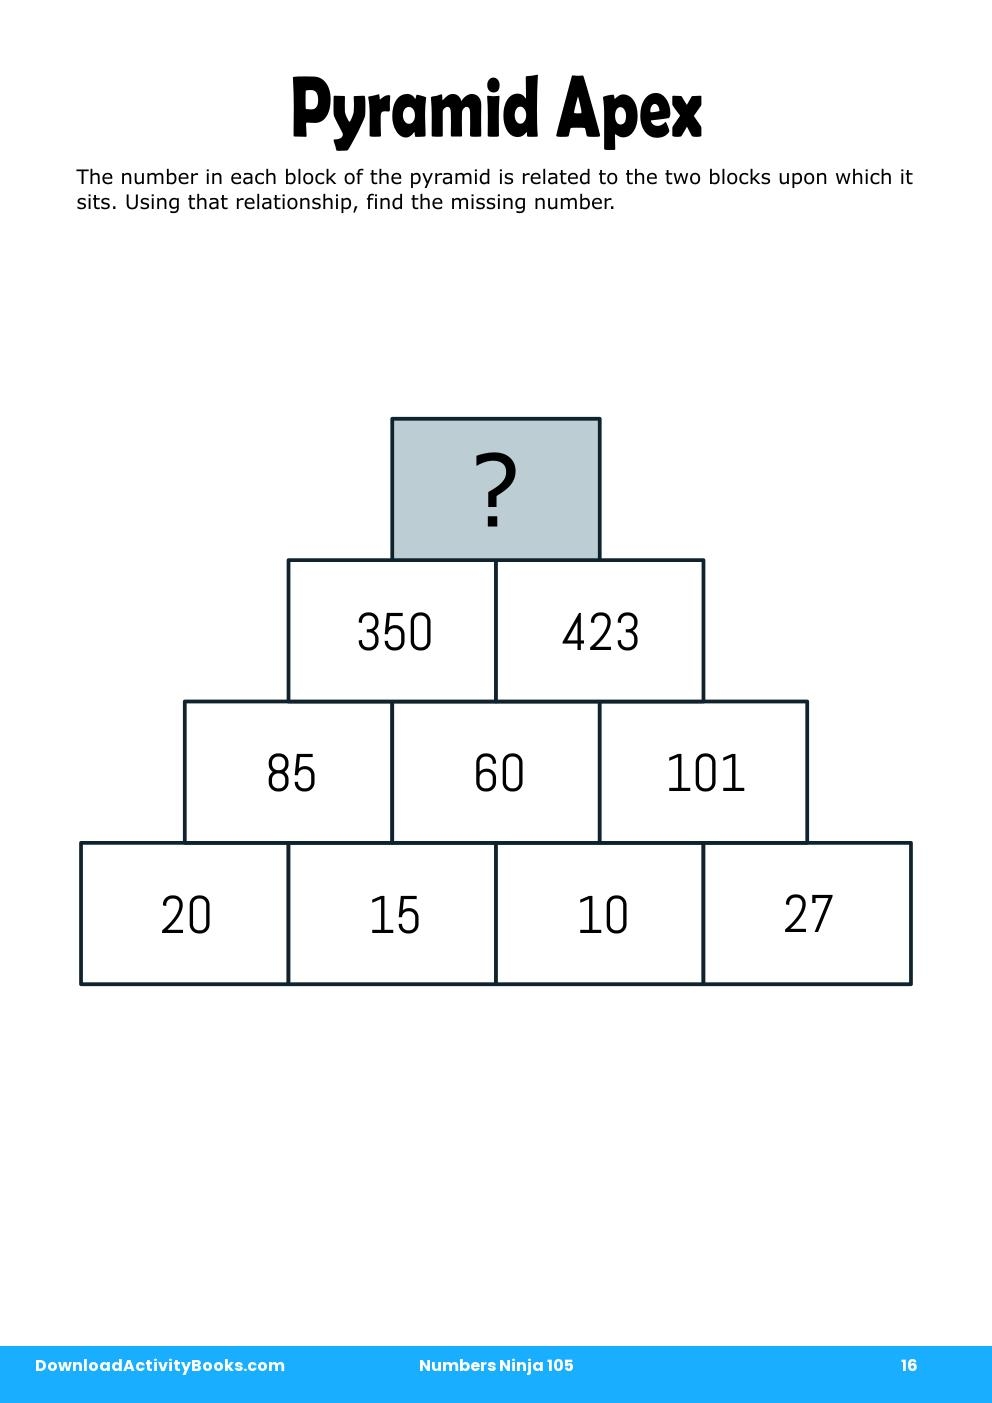 Pyramid Apex in Numbers Ninja 105